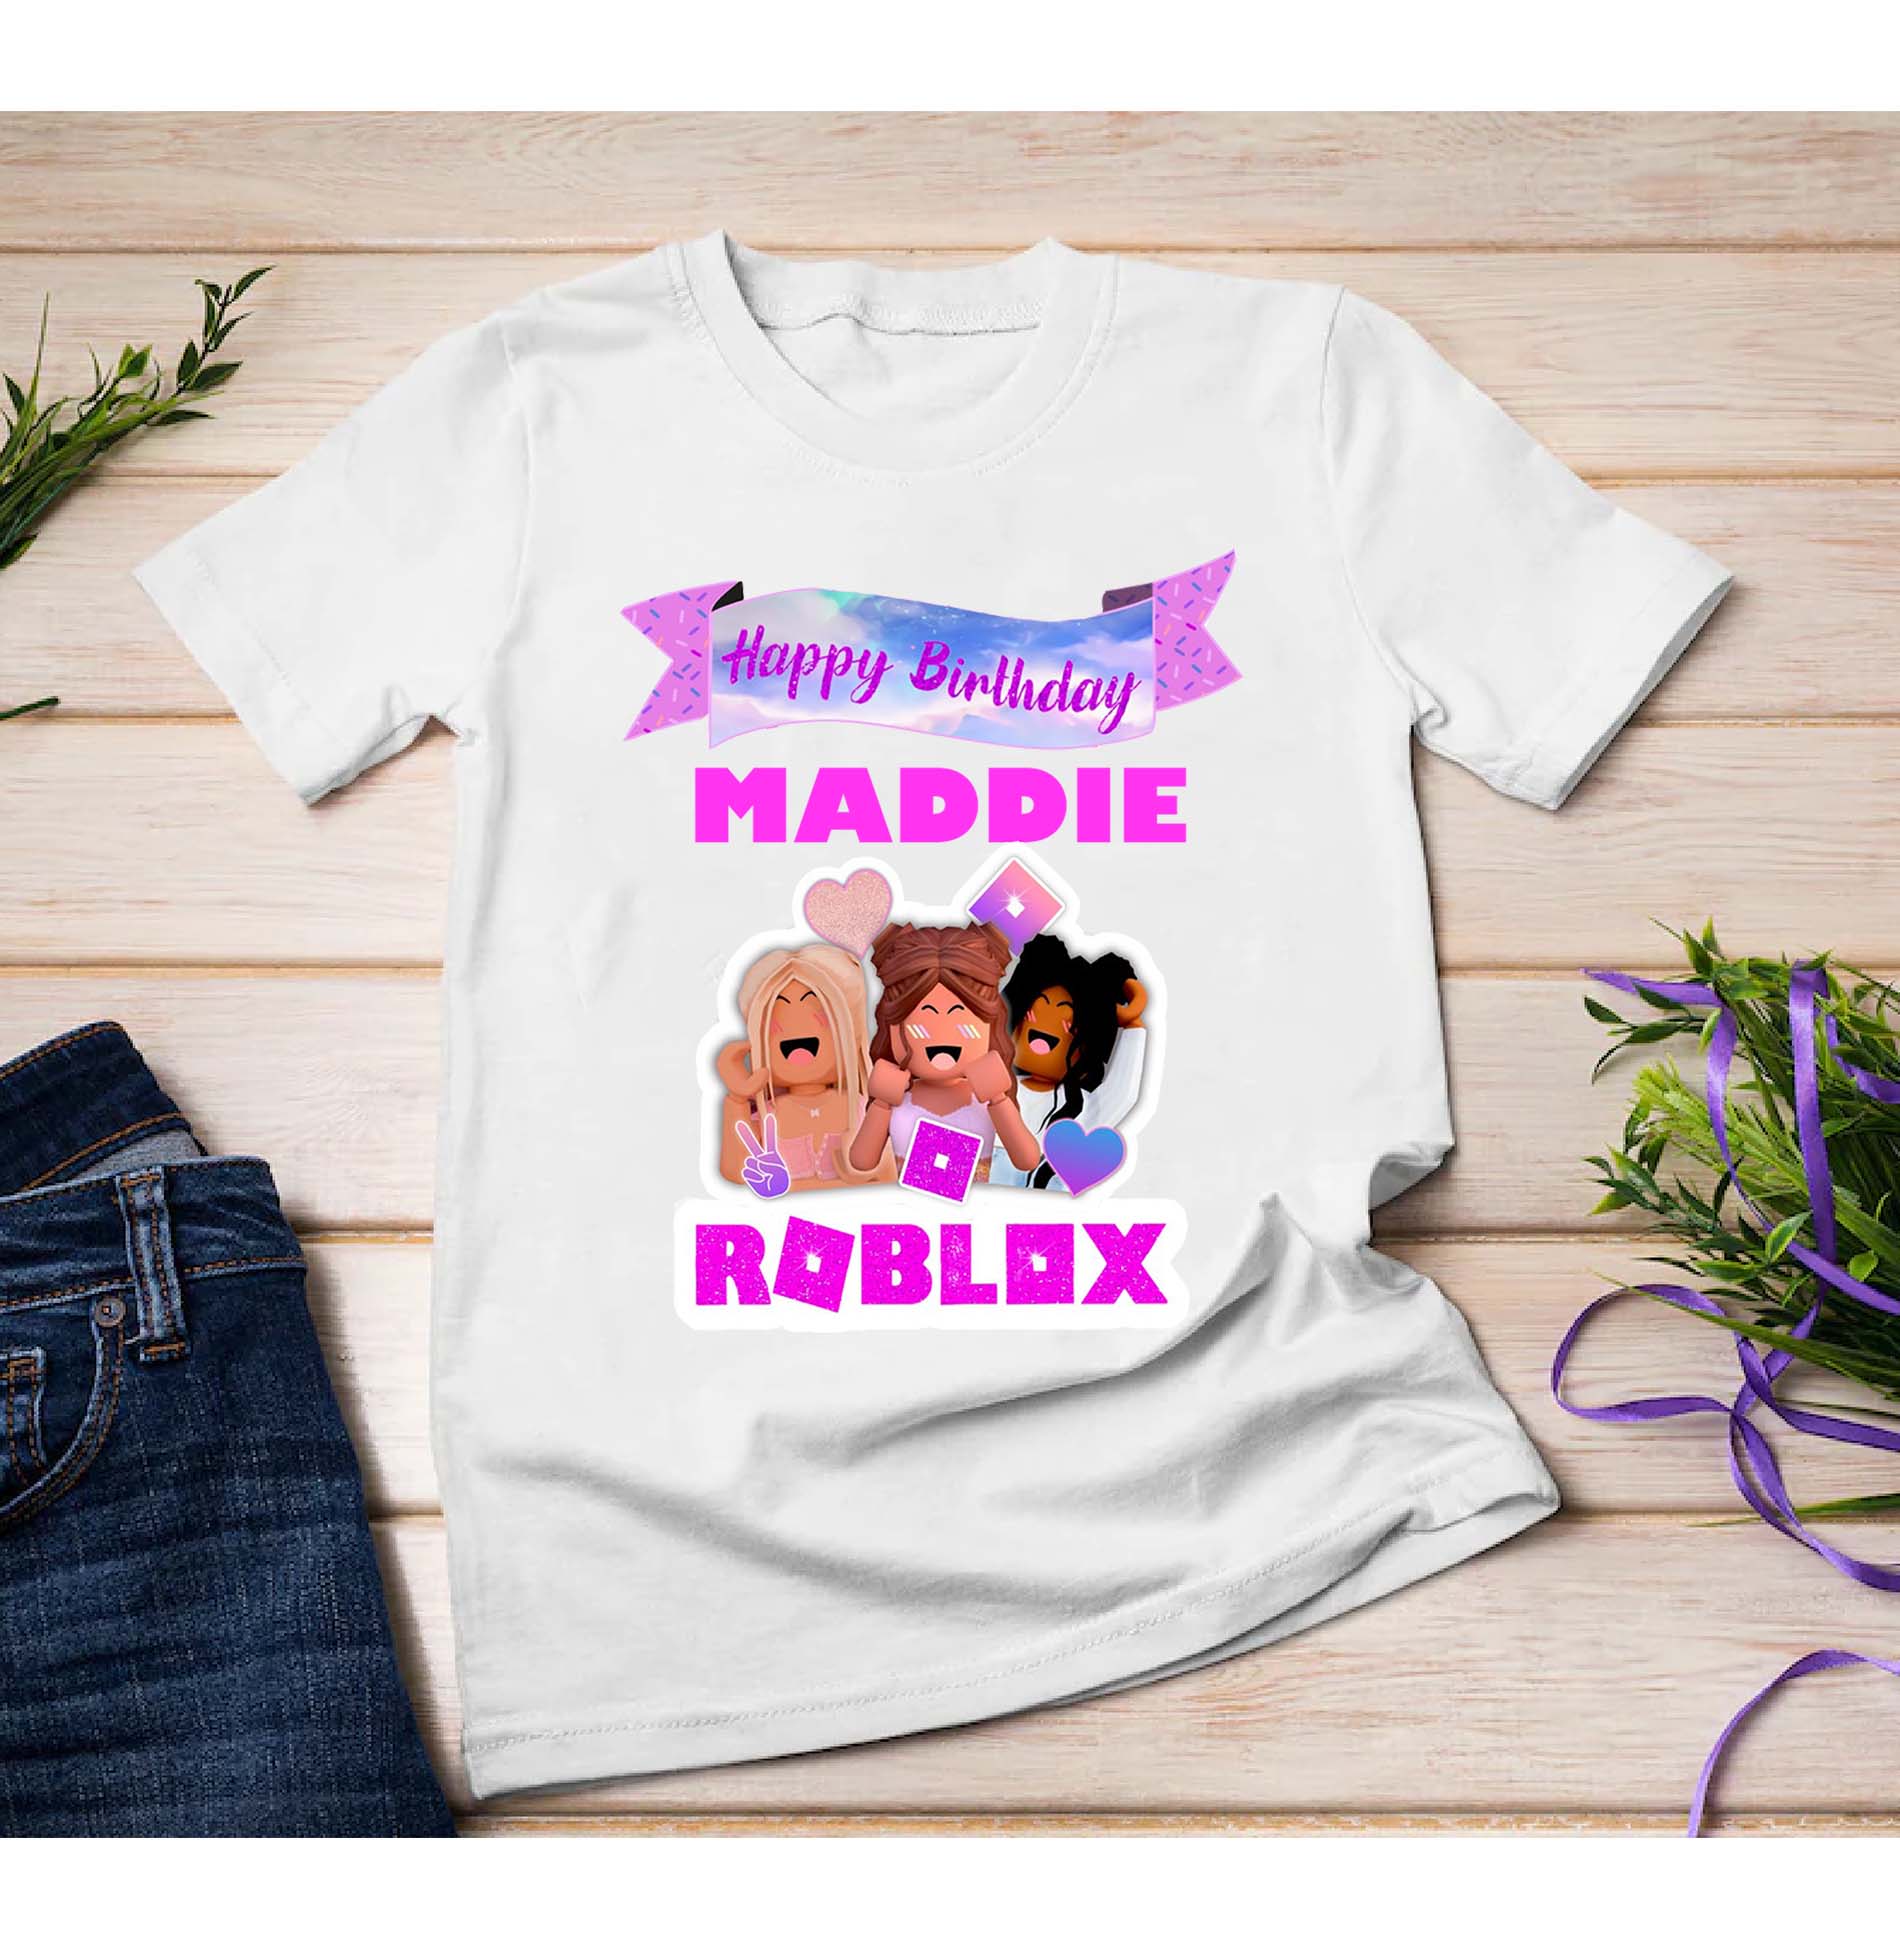 Roblox Birthday Girl Shirt, Custom Gift Party, Unisex Kids Tee Short Sleeve Tshirt, Family Personalized Shirt